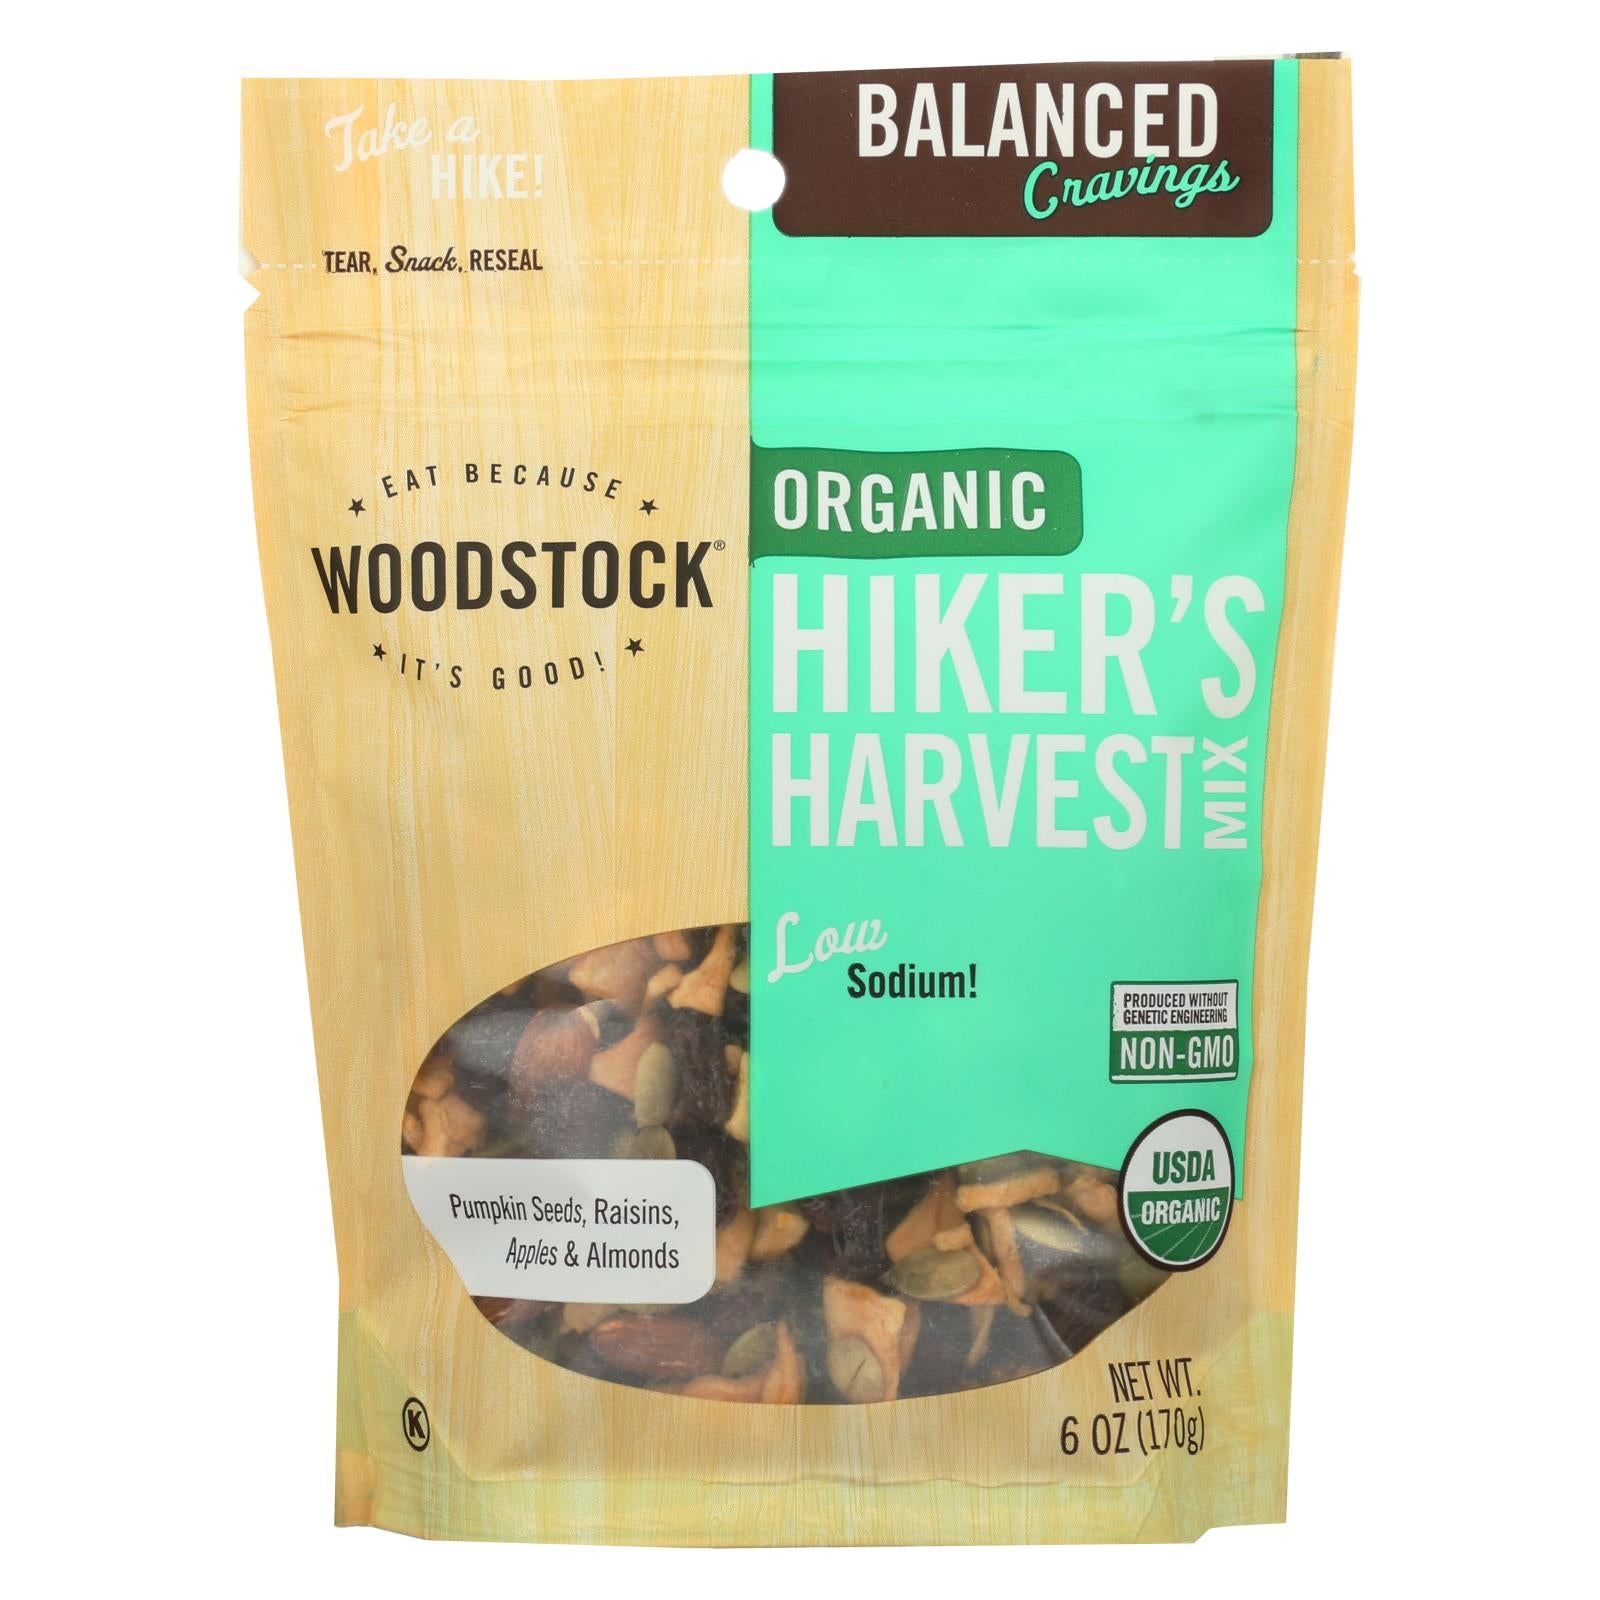 Woodstock Organic Hikers Harvest Snack Mix - 6 Oz.